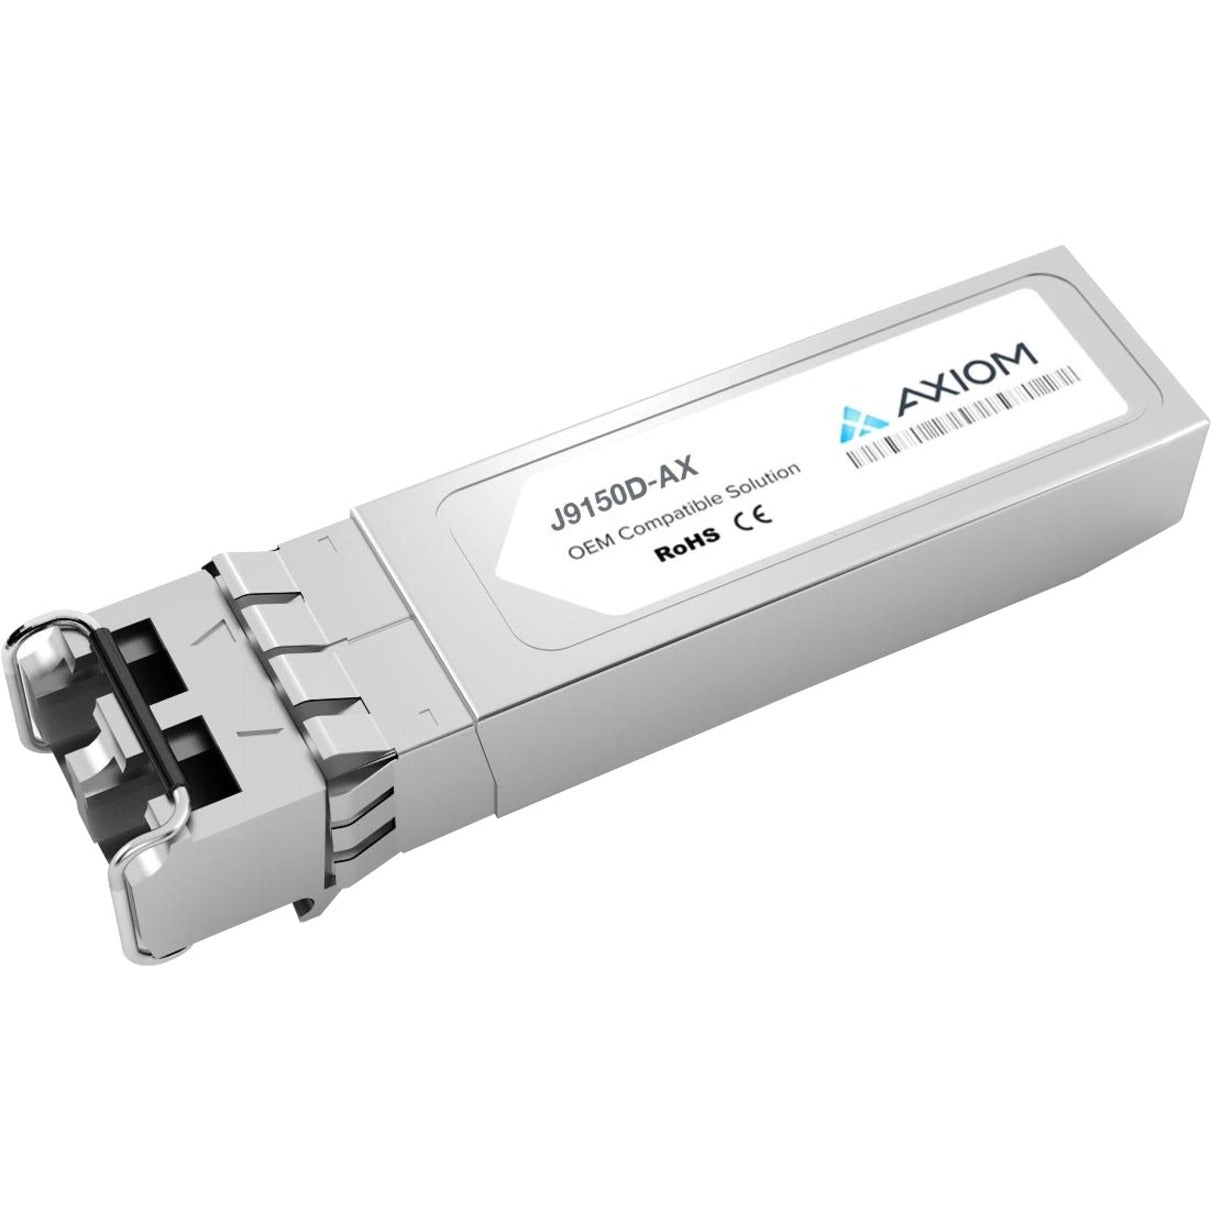 Axiom J9150D-AX 10GBASE-SR SFP+ Transceiver for Aruba, Lifetime Warranty, MSA Compliant